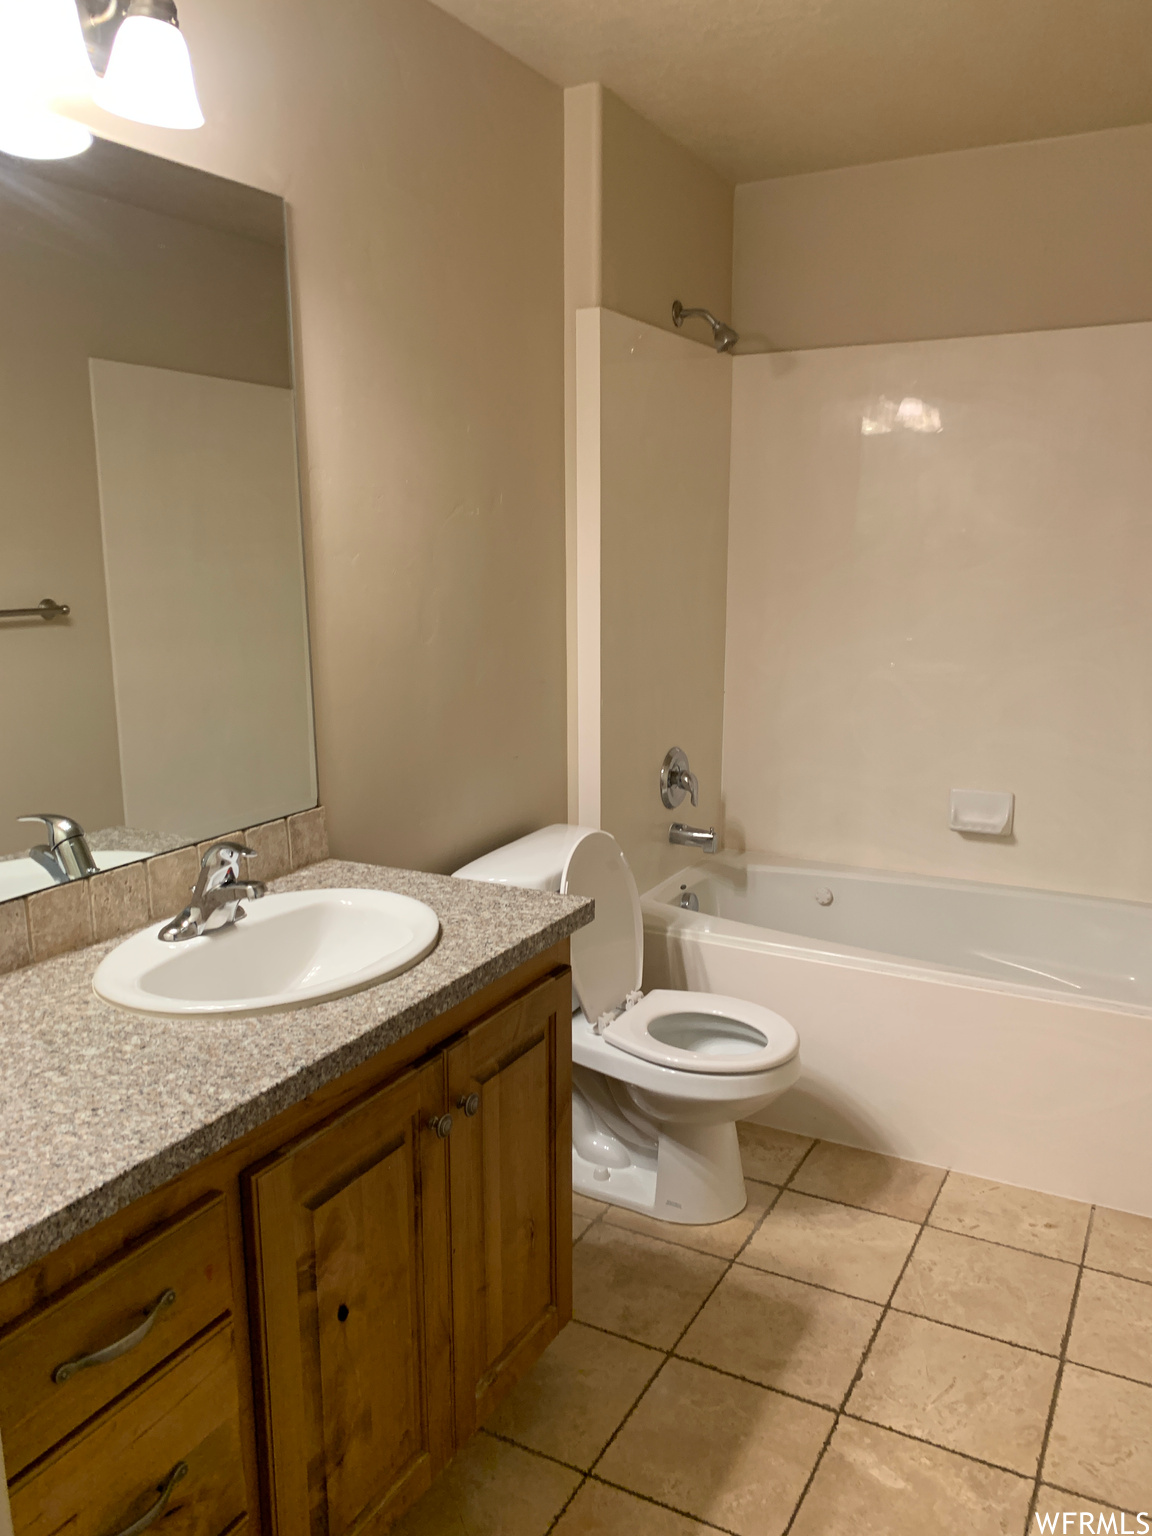 Full bathroom with washtub / shower combination, oversized vanity, light tile flooring, and mirror